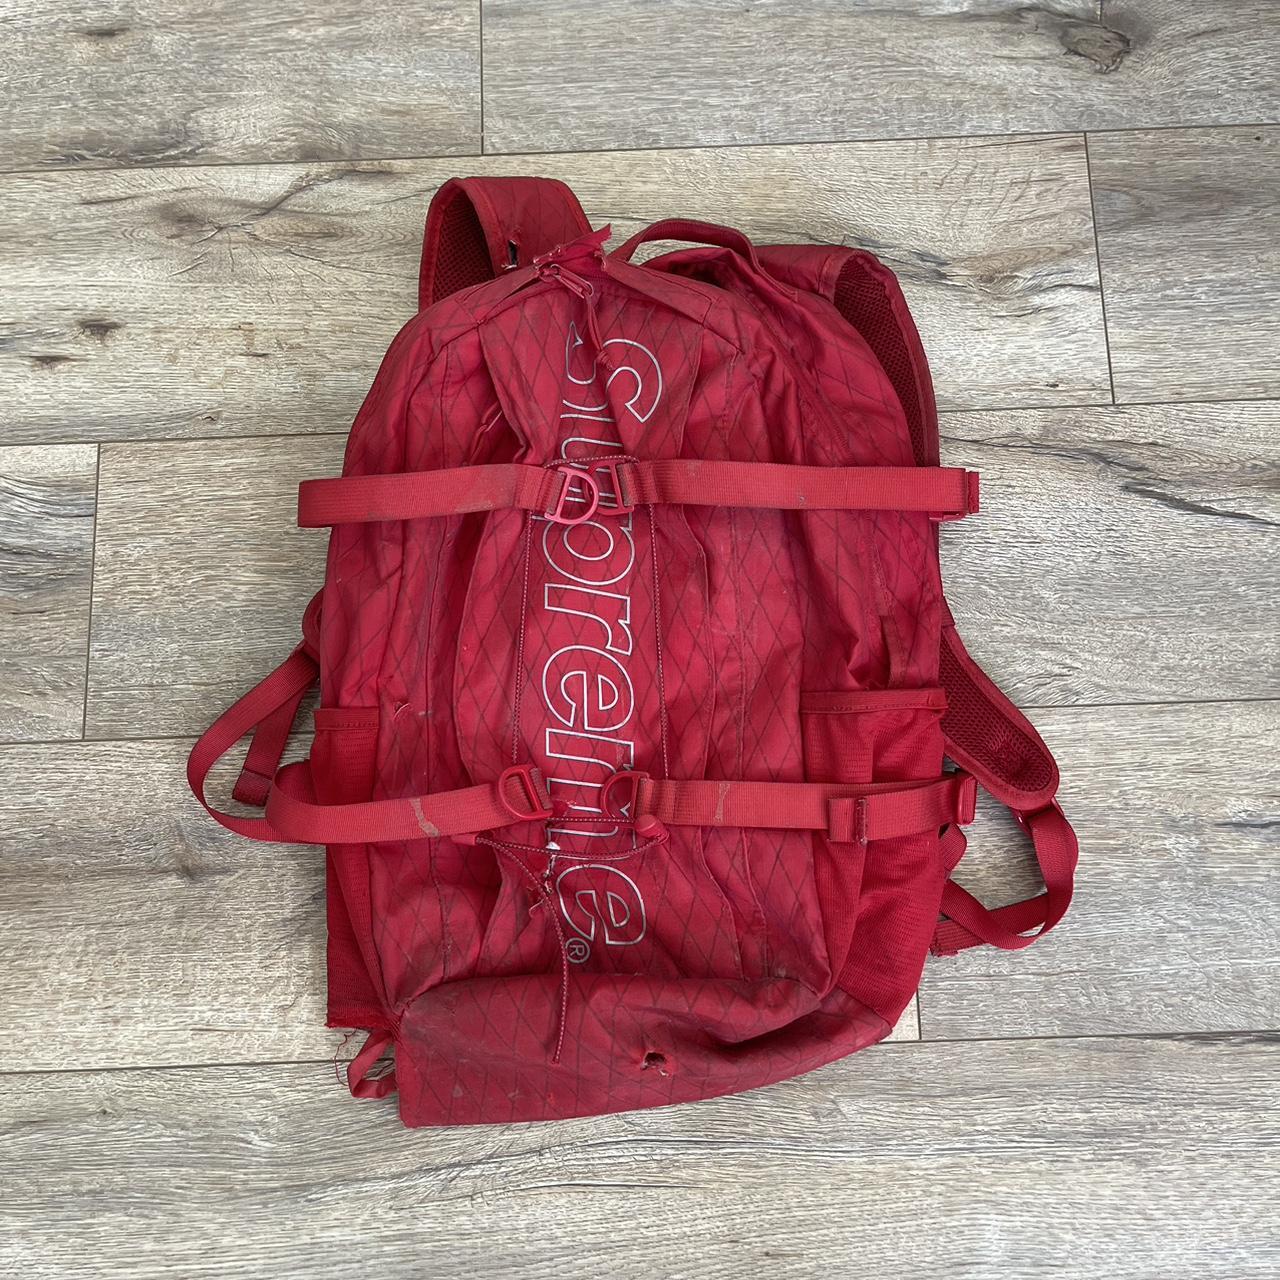 Supreme Duffle Bag (FW18) Red